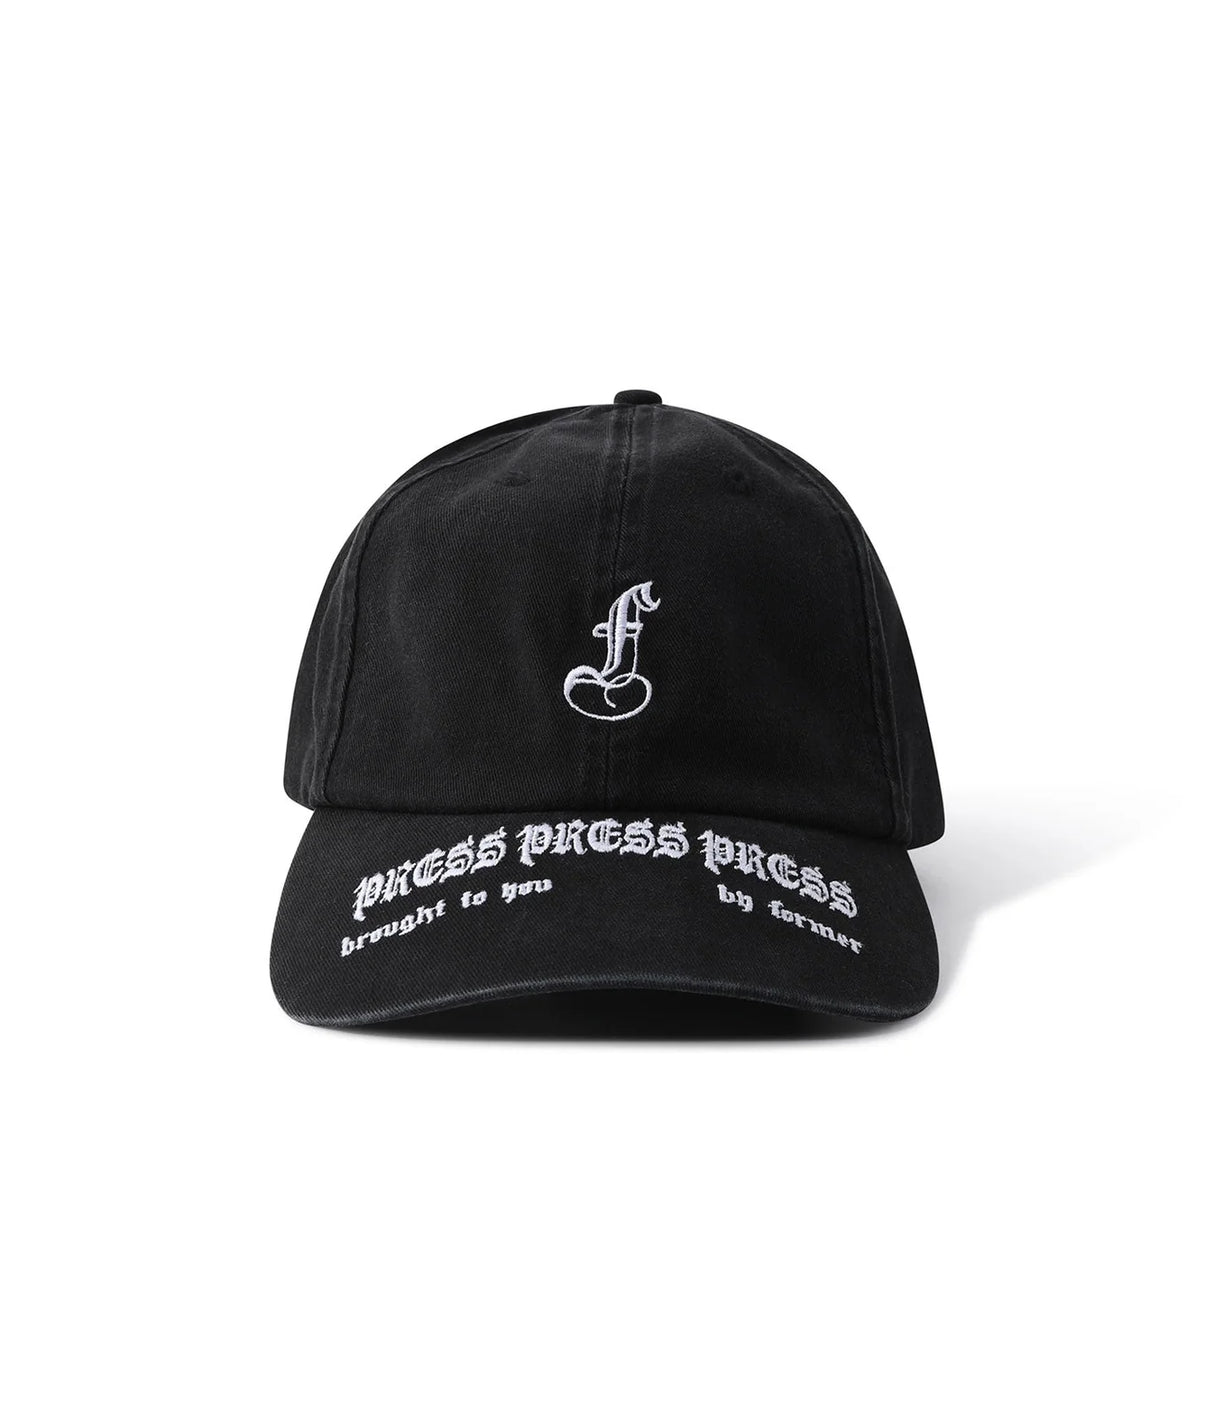 Former Press Black Cap Strapback Hat